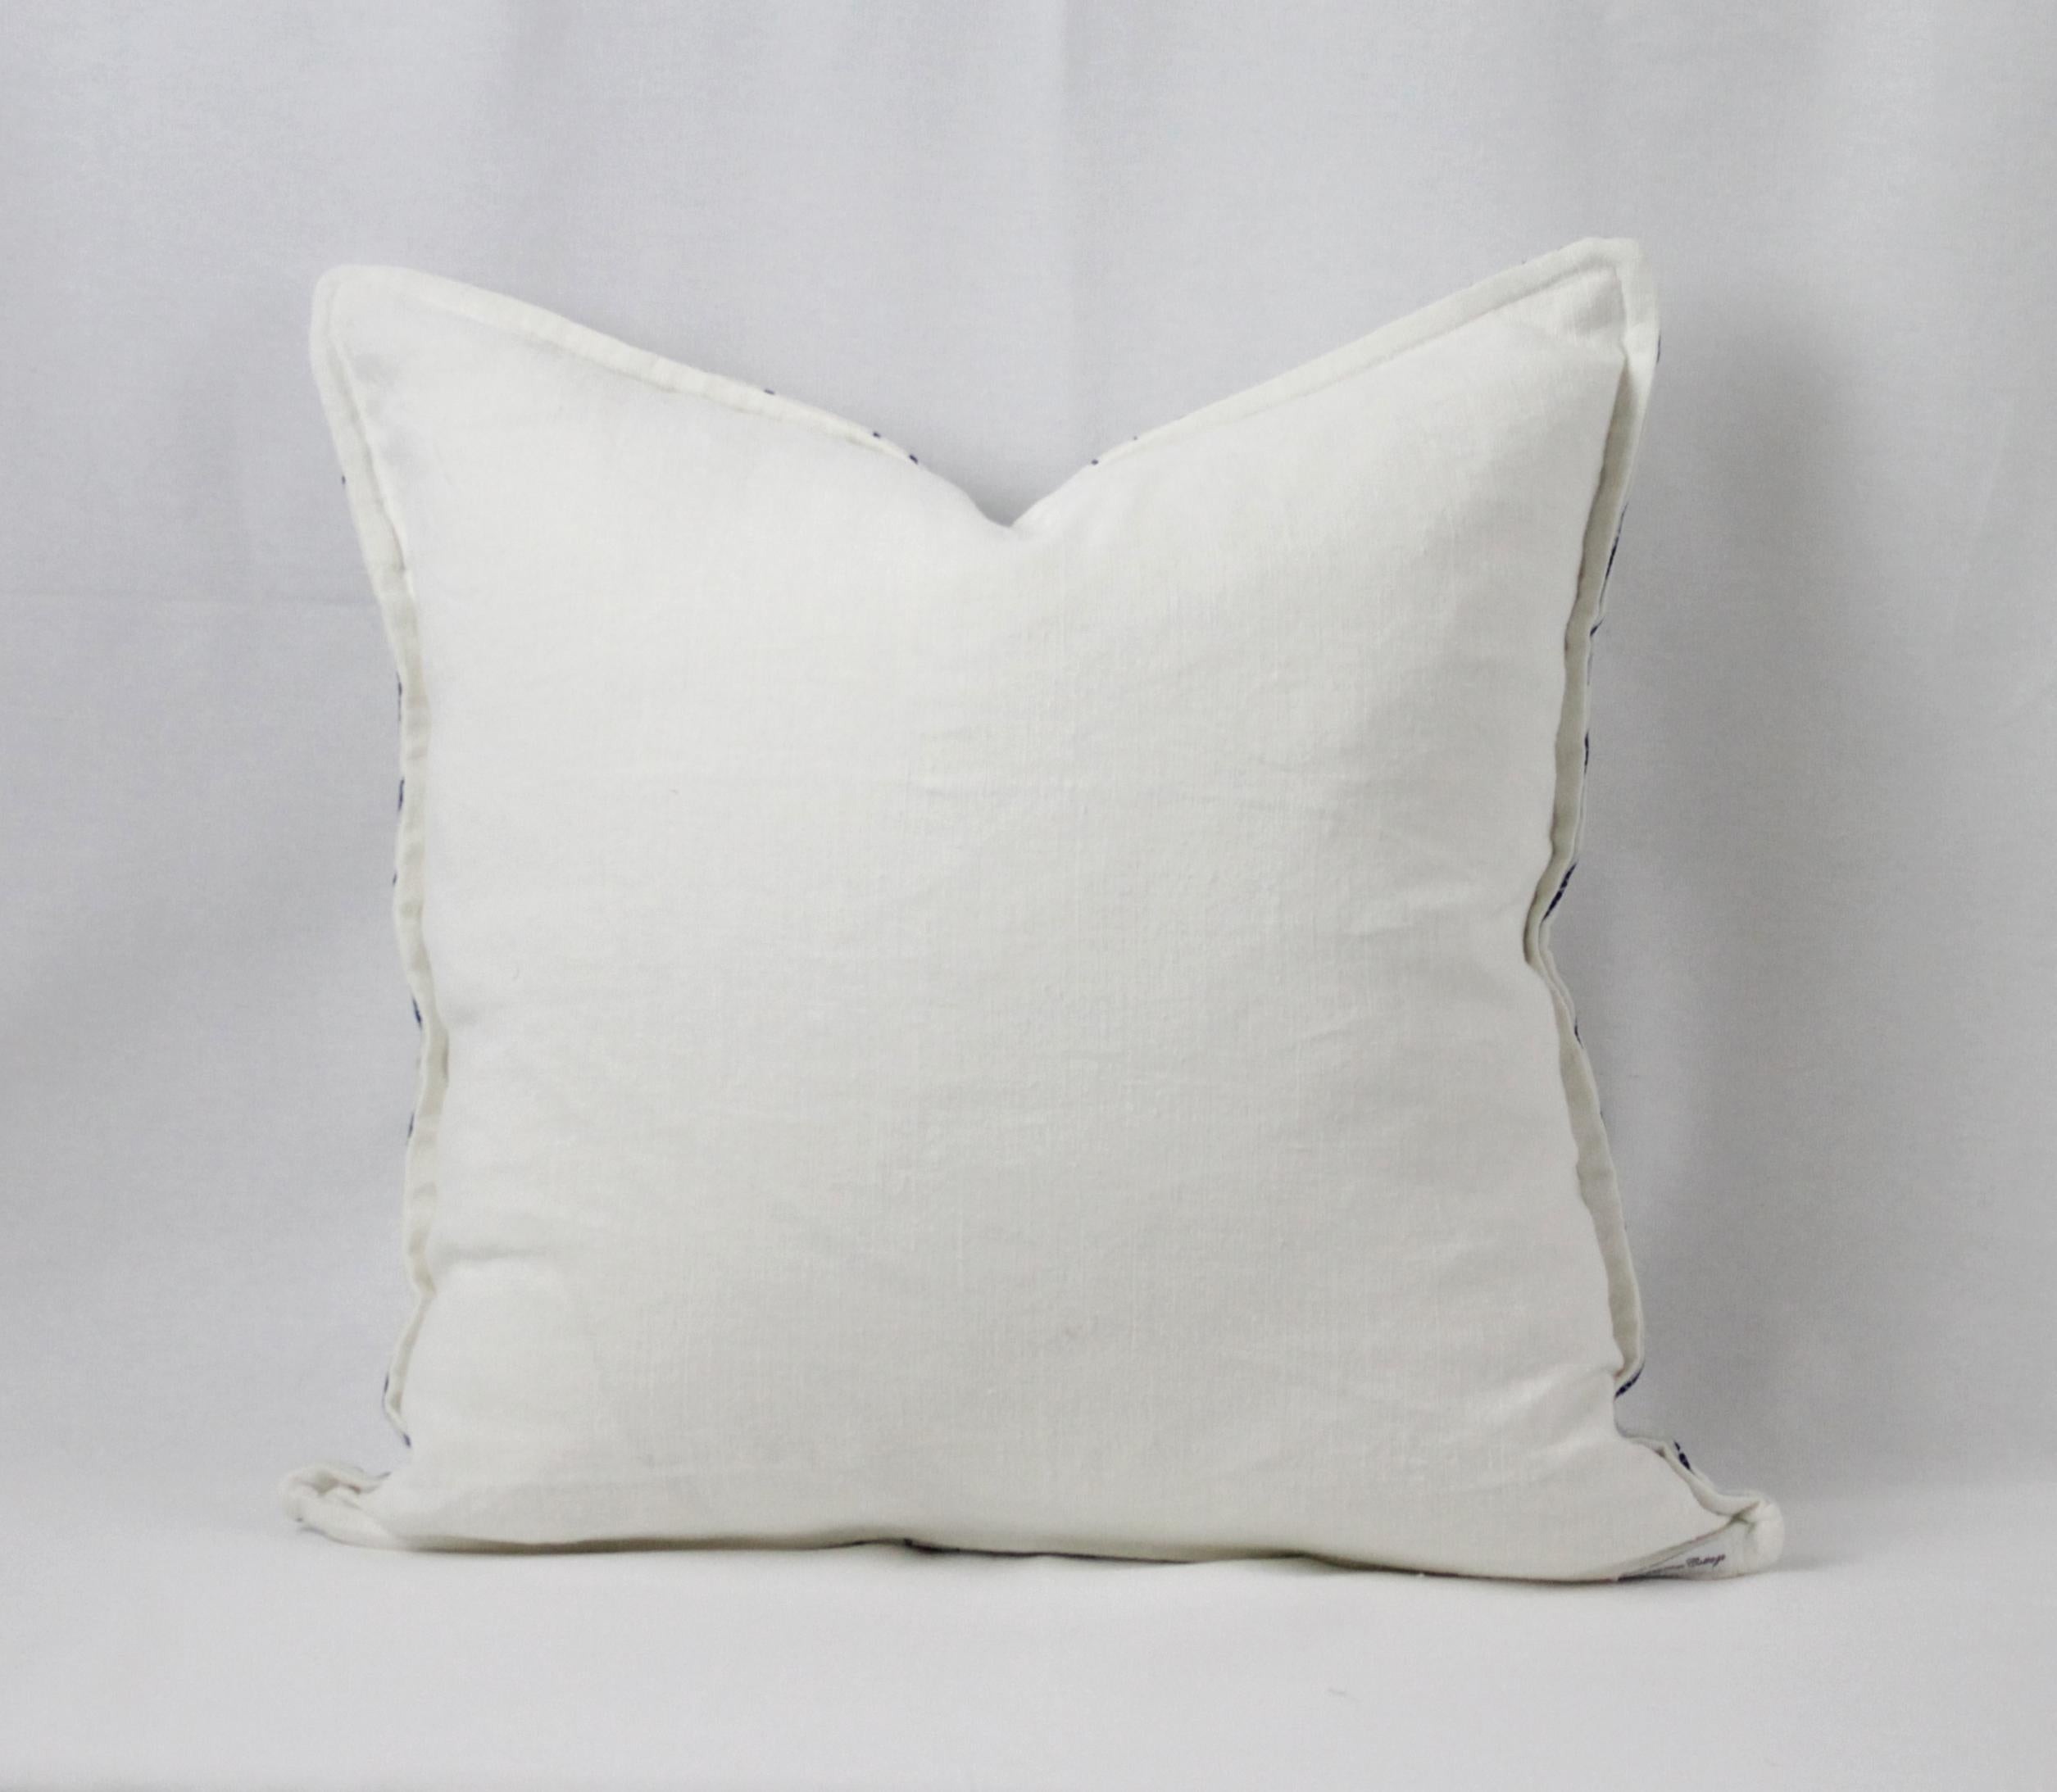 Vintage Shibori Dyed Textile Pillow with White Linen For Sale 2